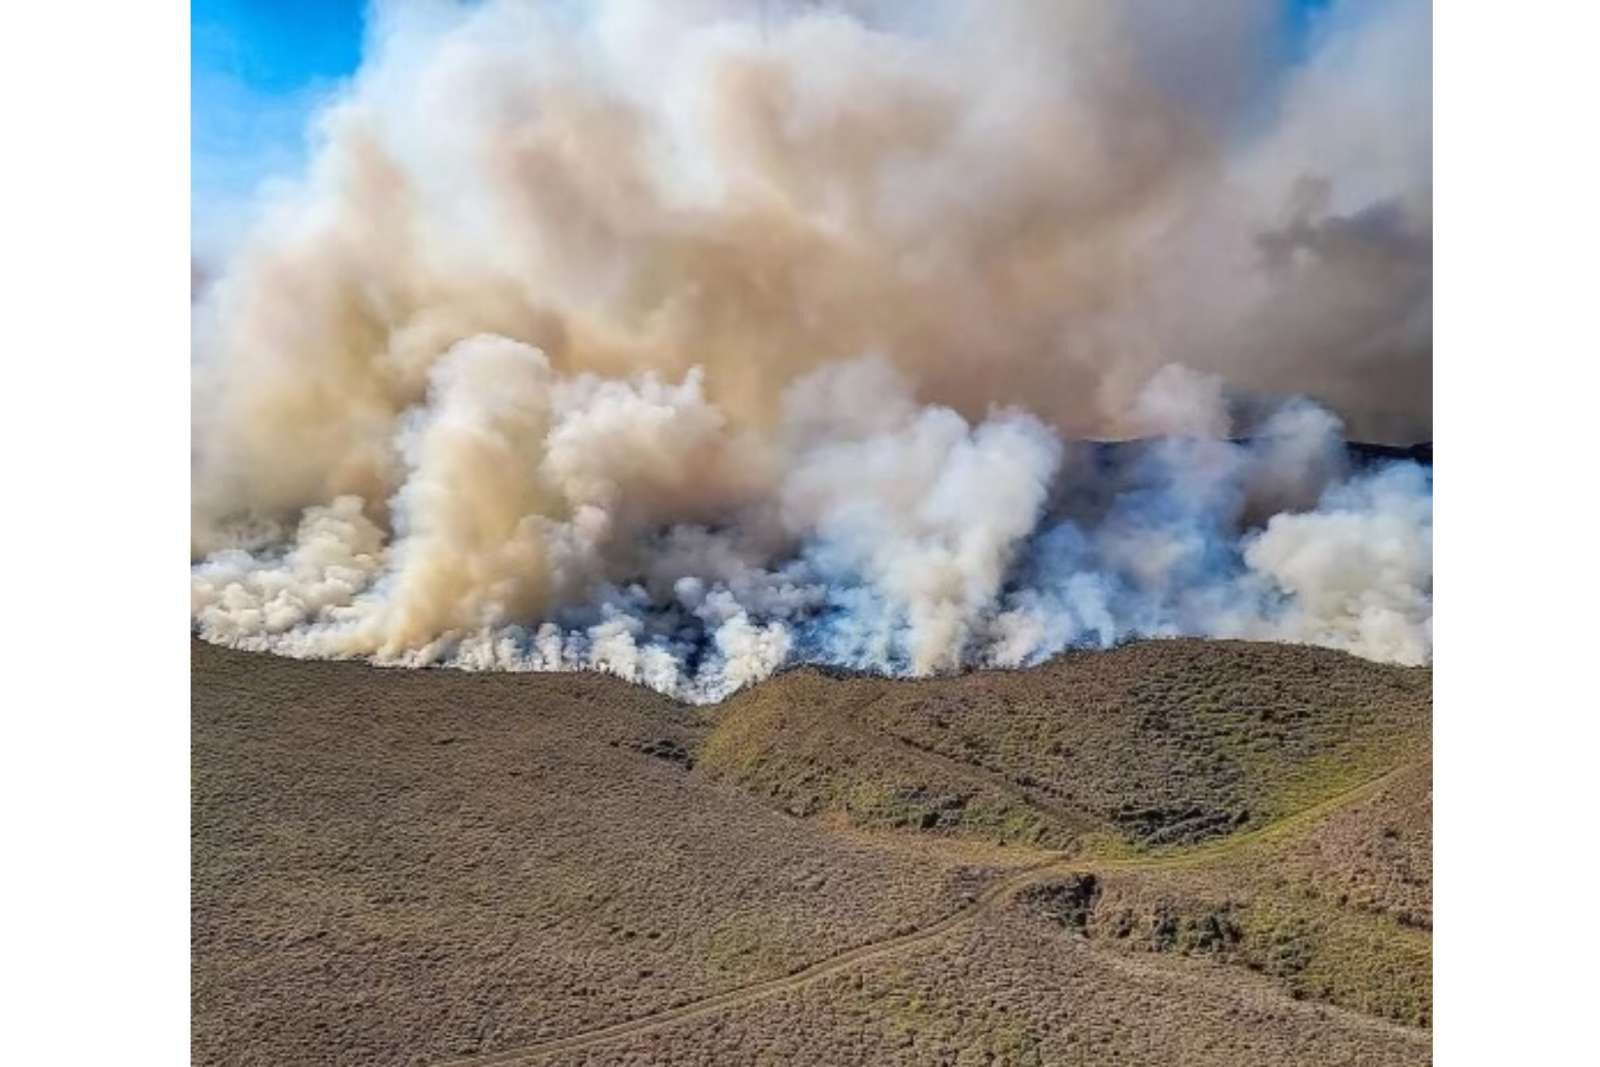 A large wildfire burns in Hawaii near Waimea on July 31, 2021.